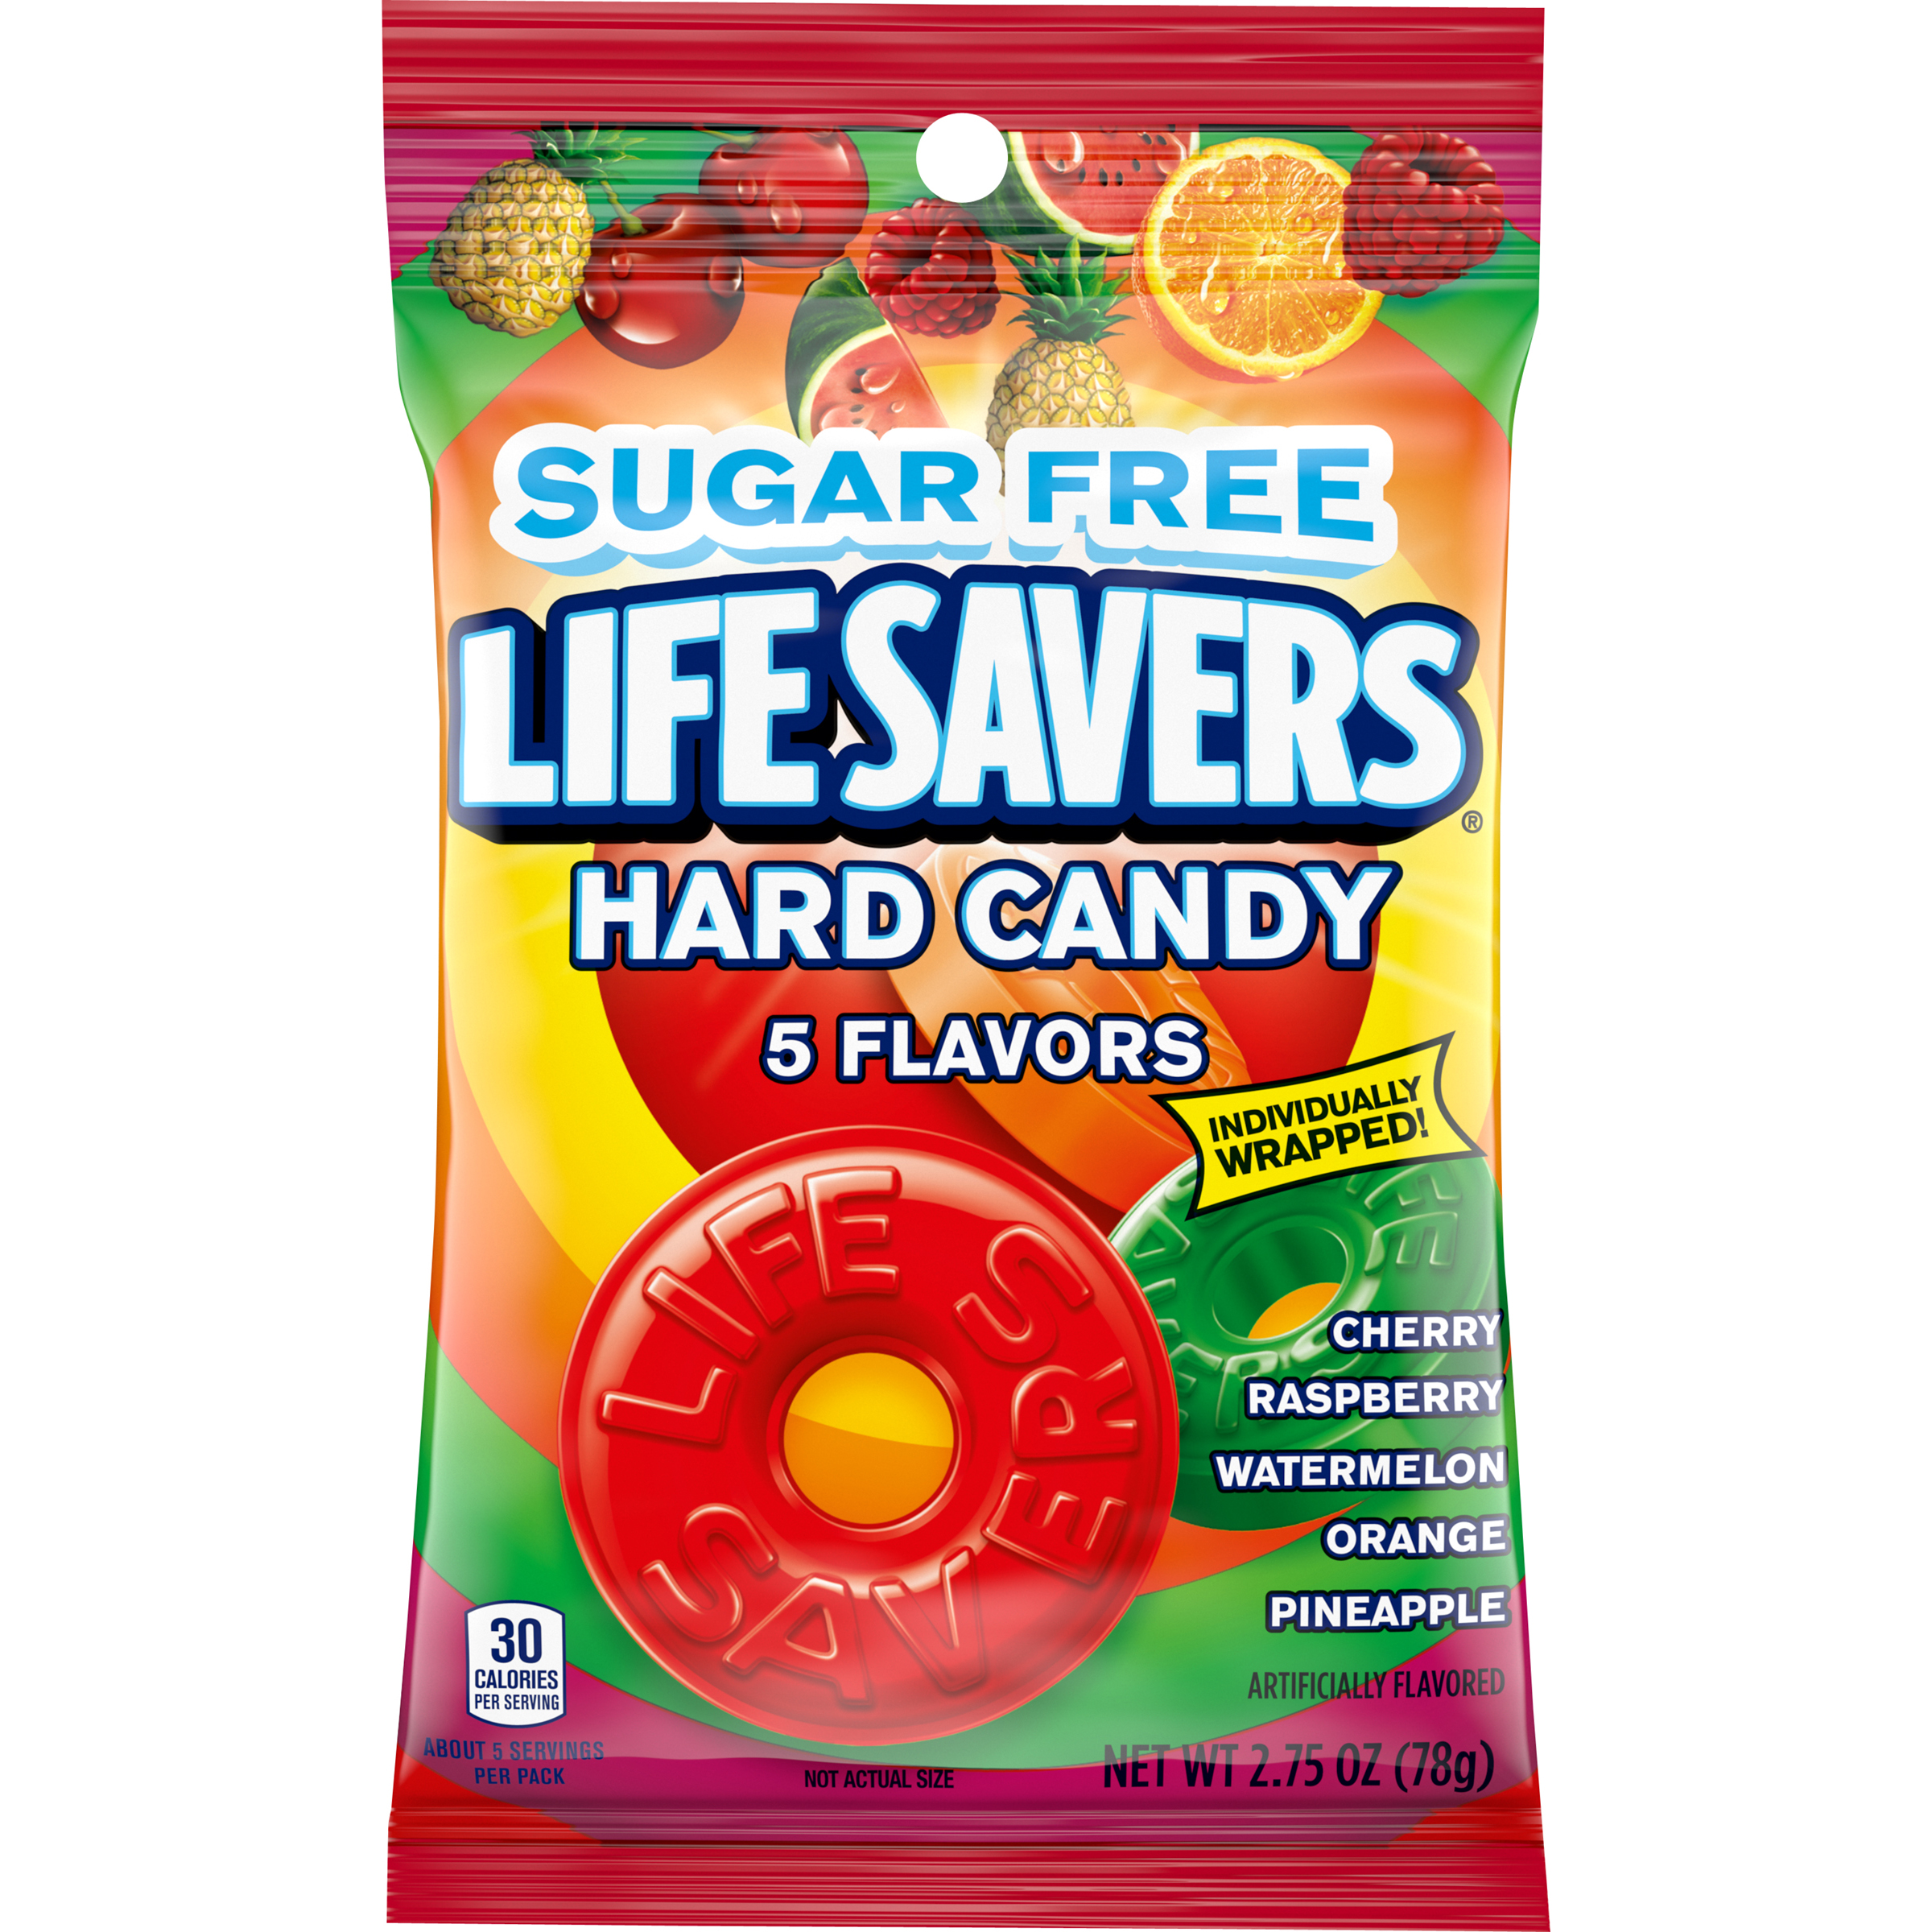 Life Savers, Sugar Free 5 Flavors Hard Candy Bag, 2.75 Ounce - image 1 of 5